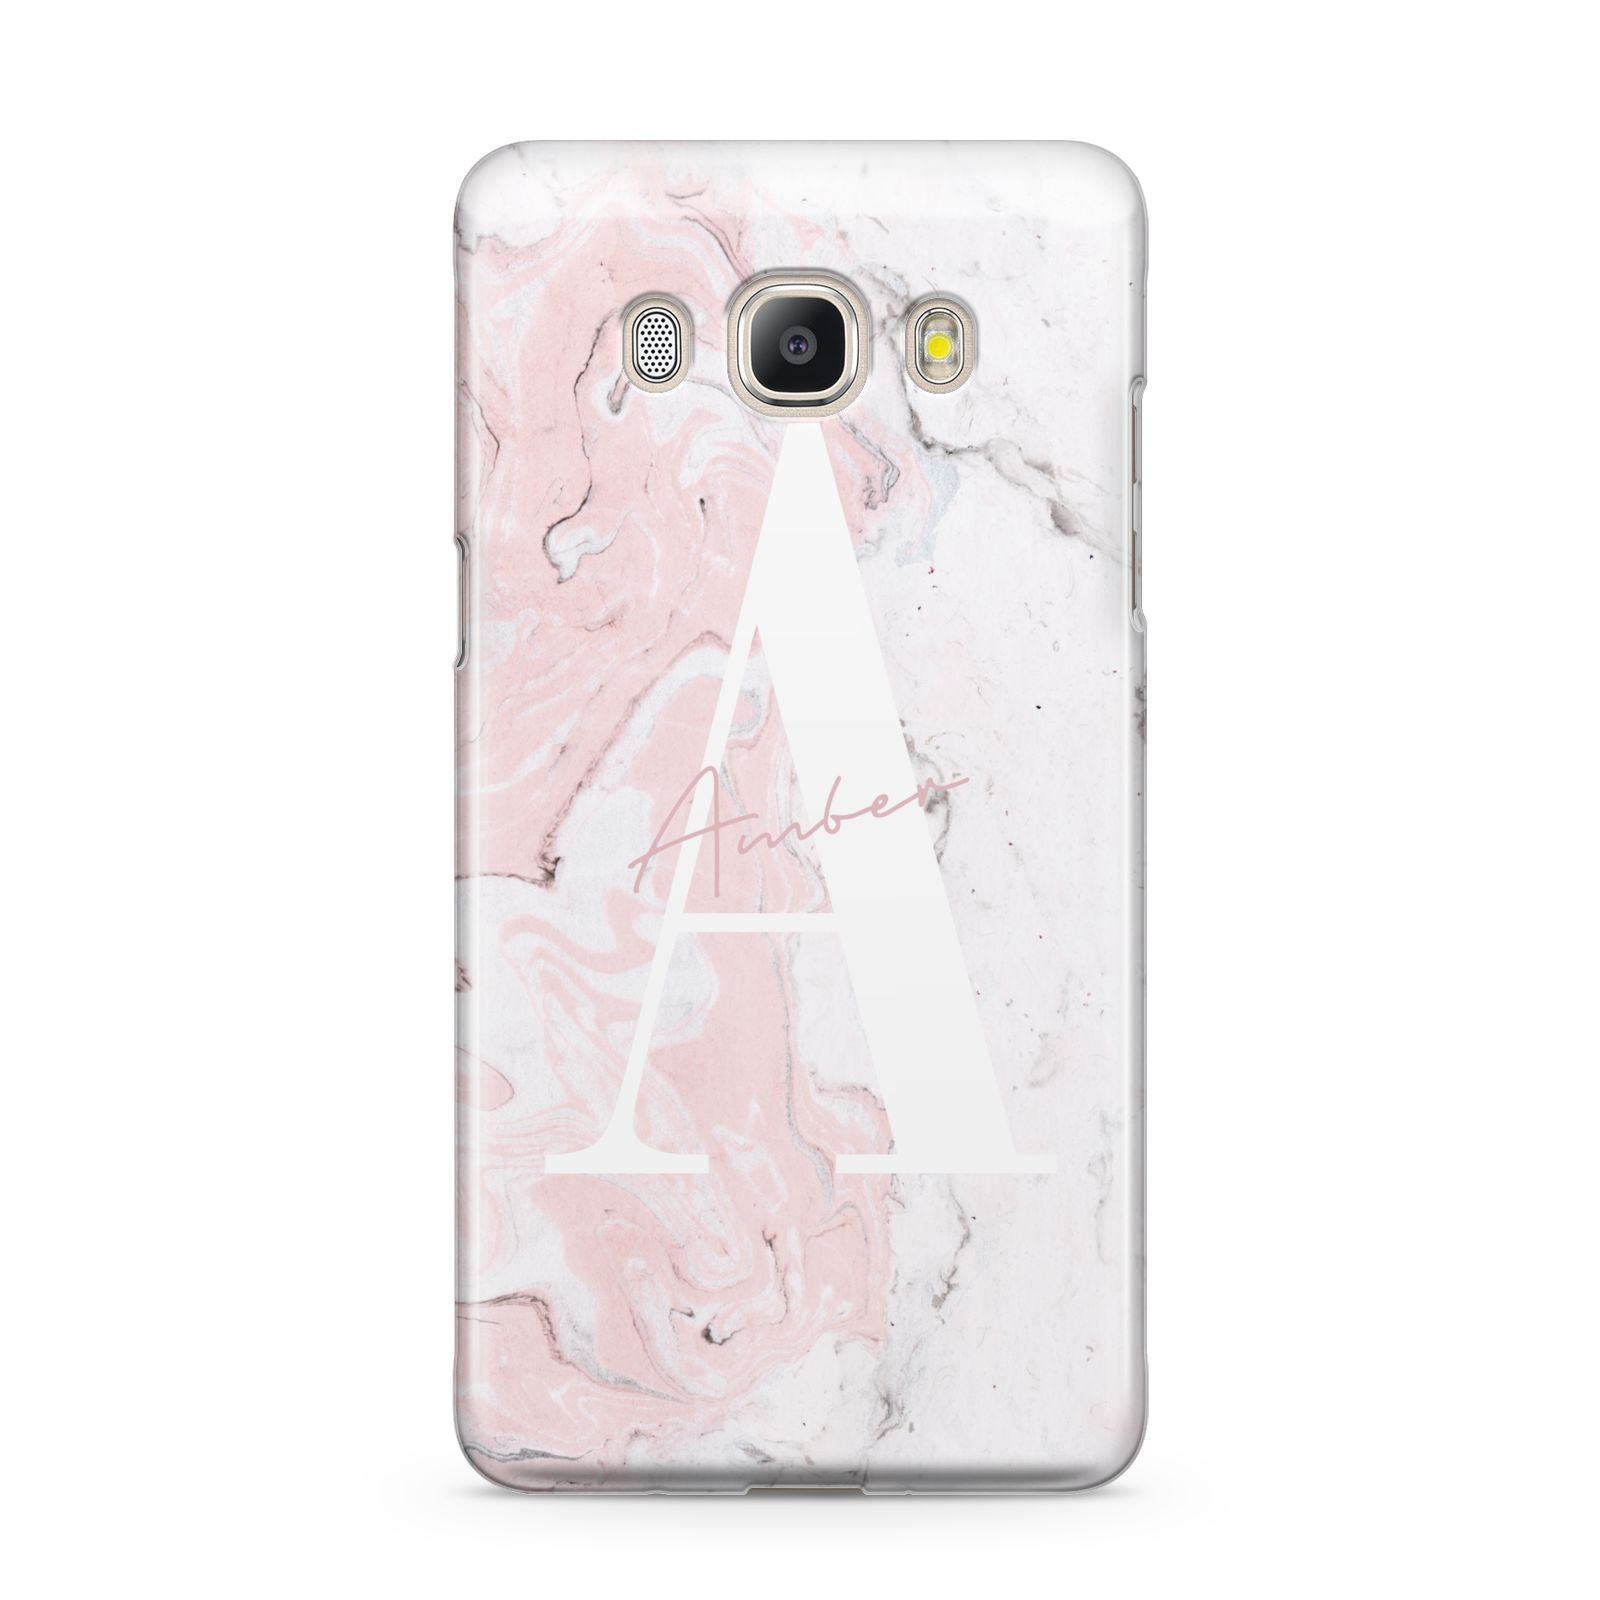 Monogrammed Pink White Ink Marble Samsung Galaxy J5 2016 Case